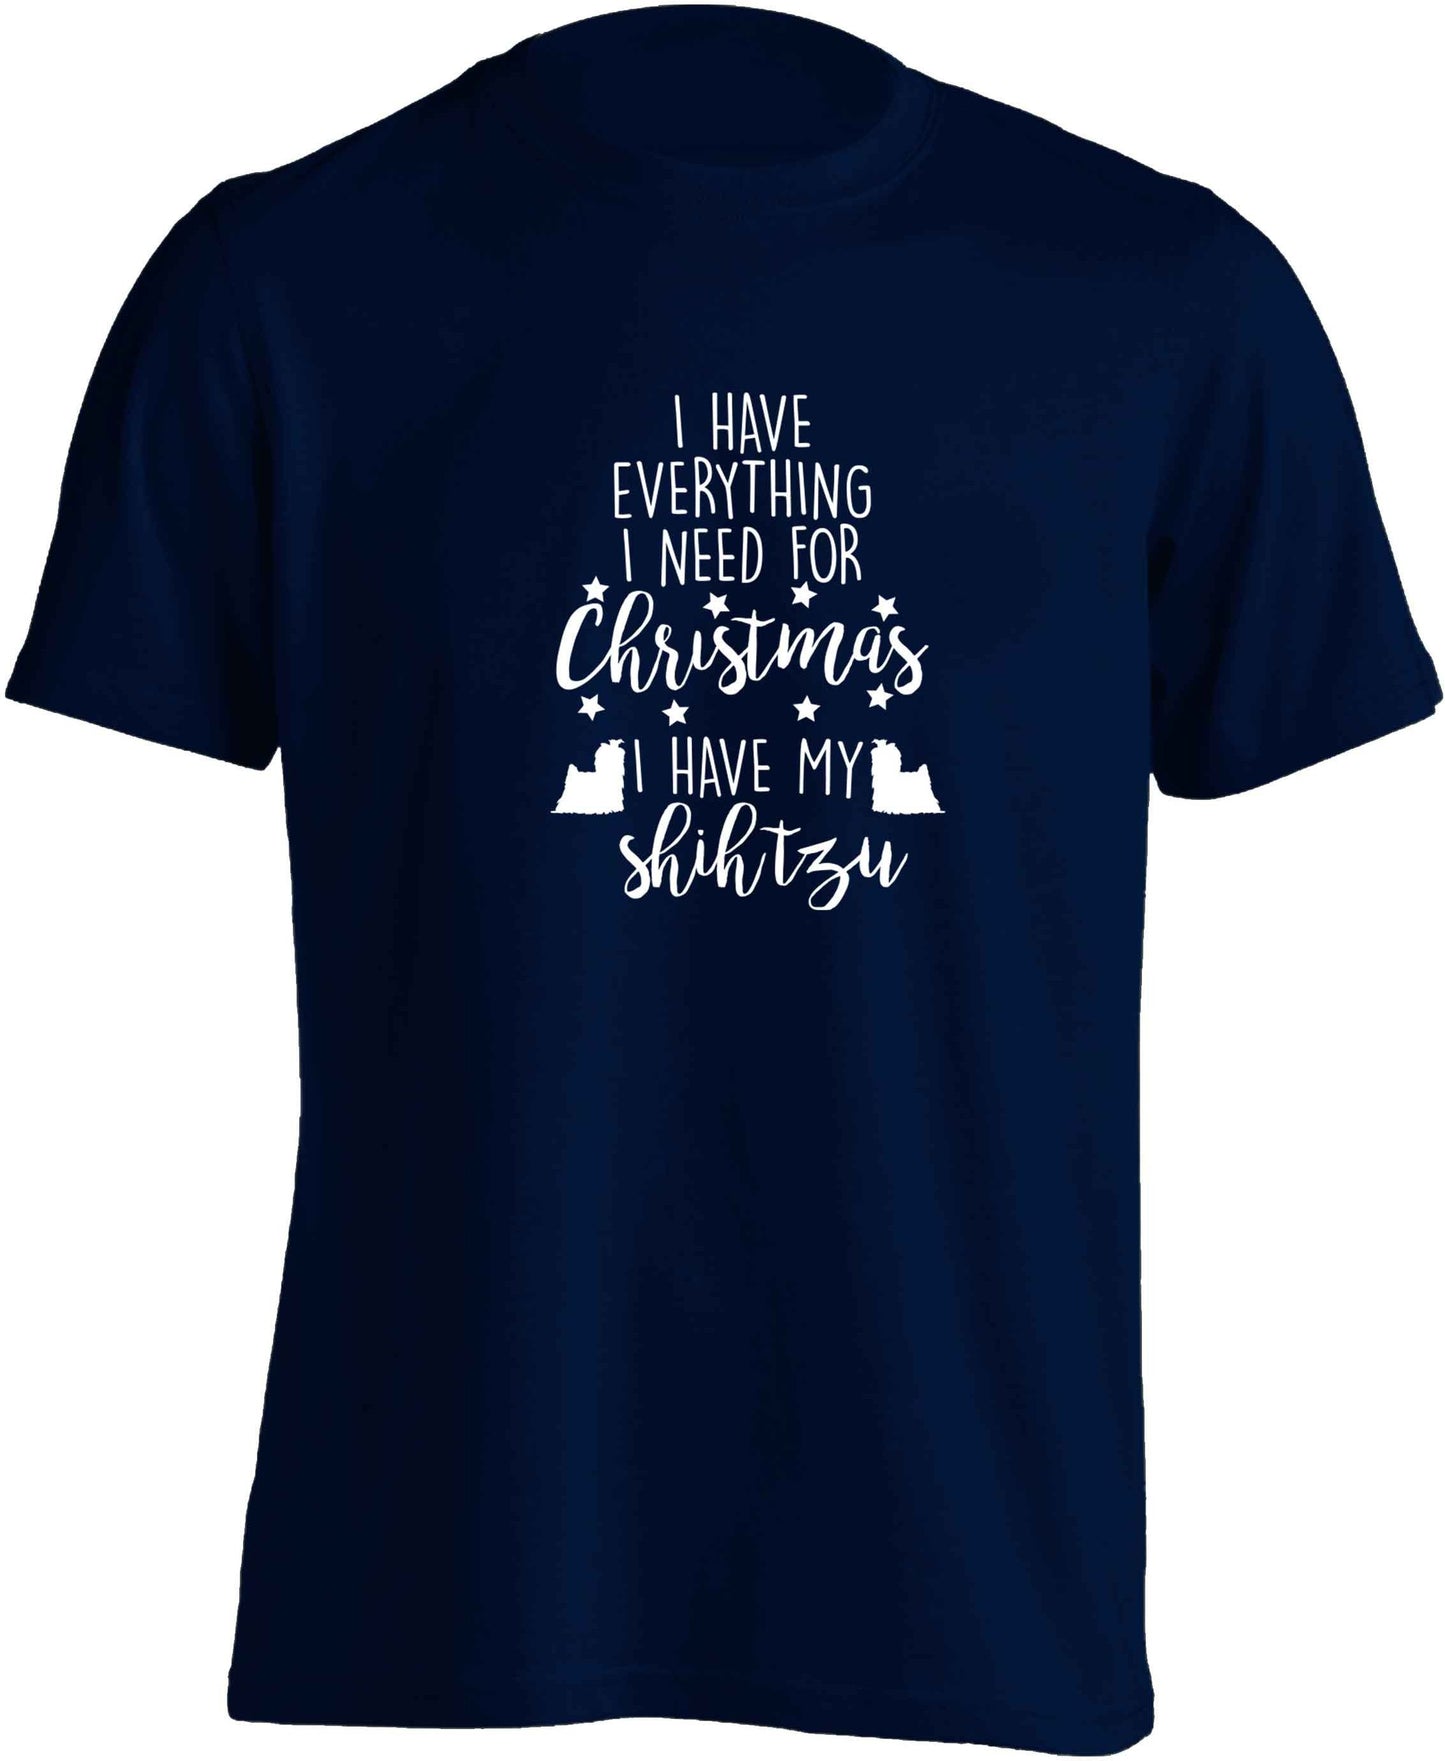 I have everything I need for Christmas I have my shih tzu adults unisex navy Tshirt 2XL